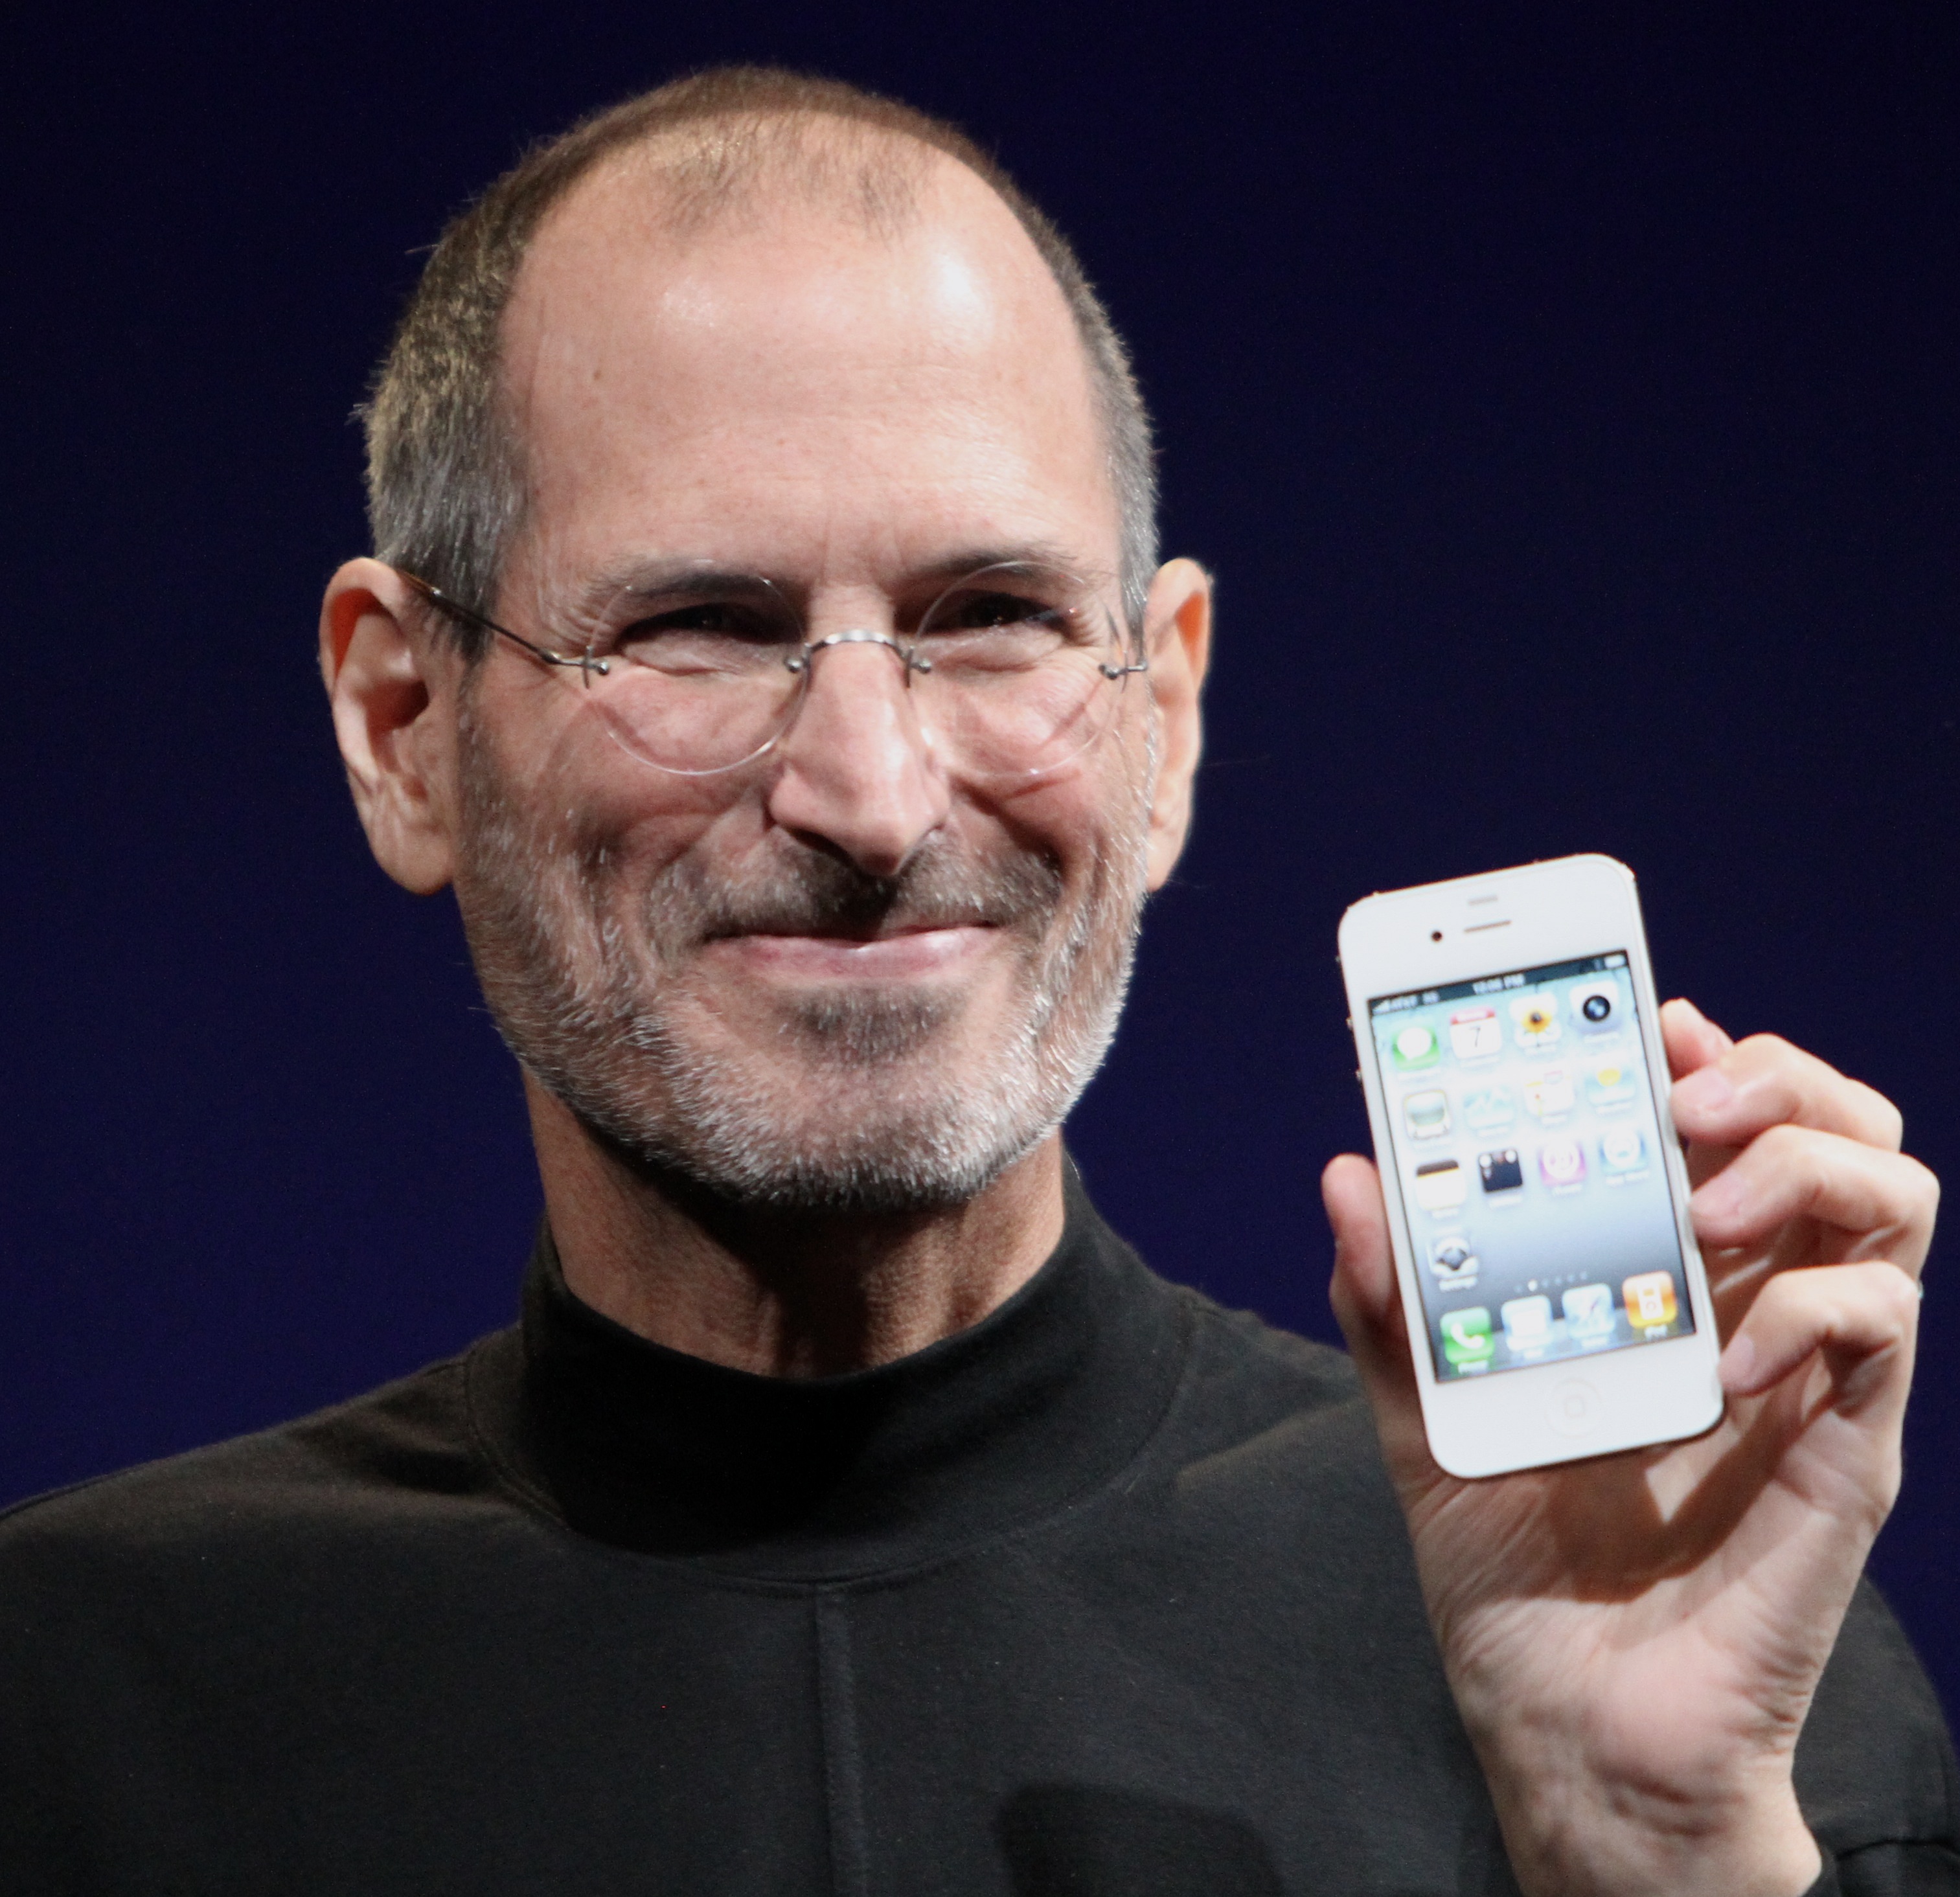  Životopis Steva Jobse